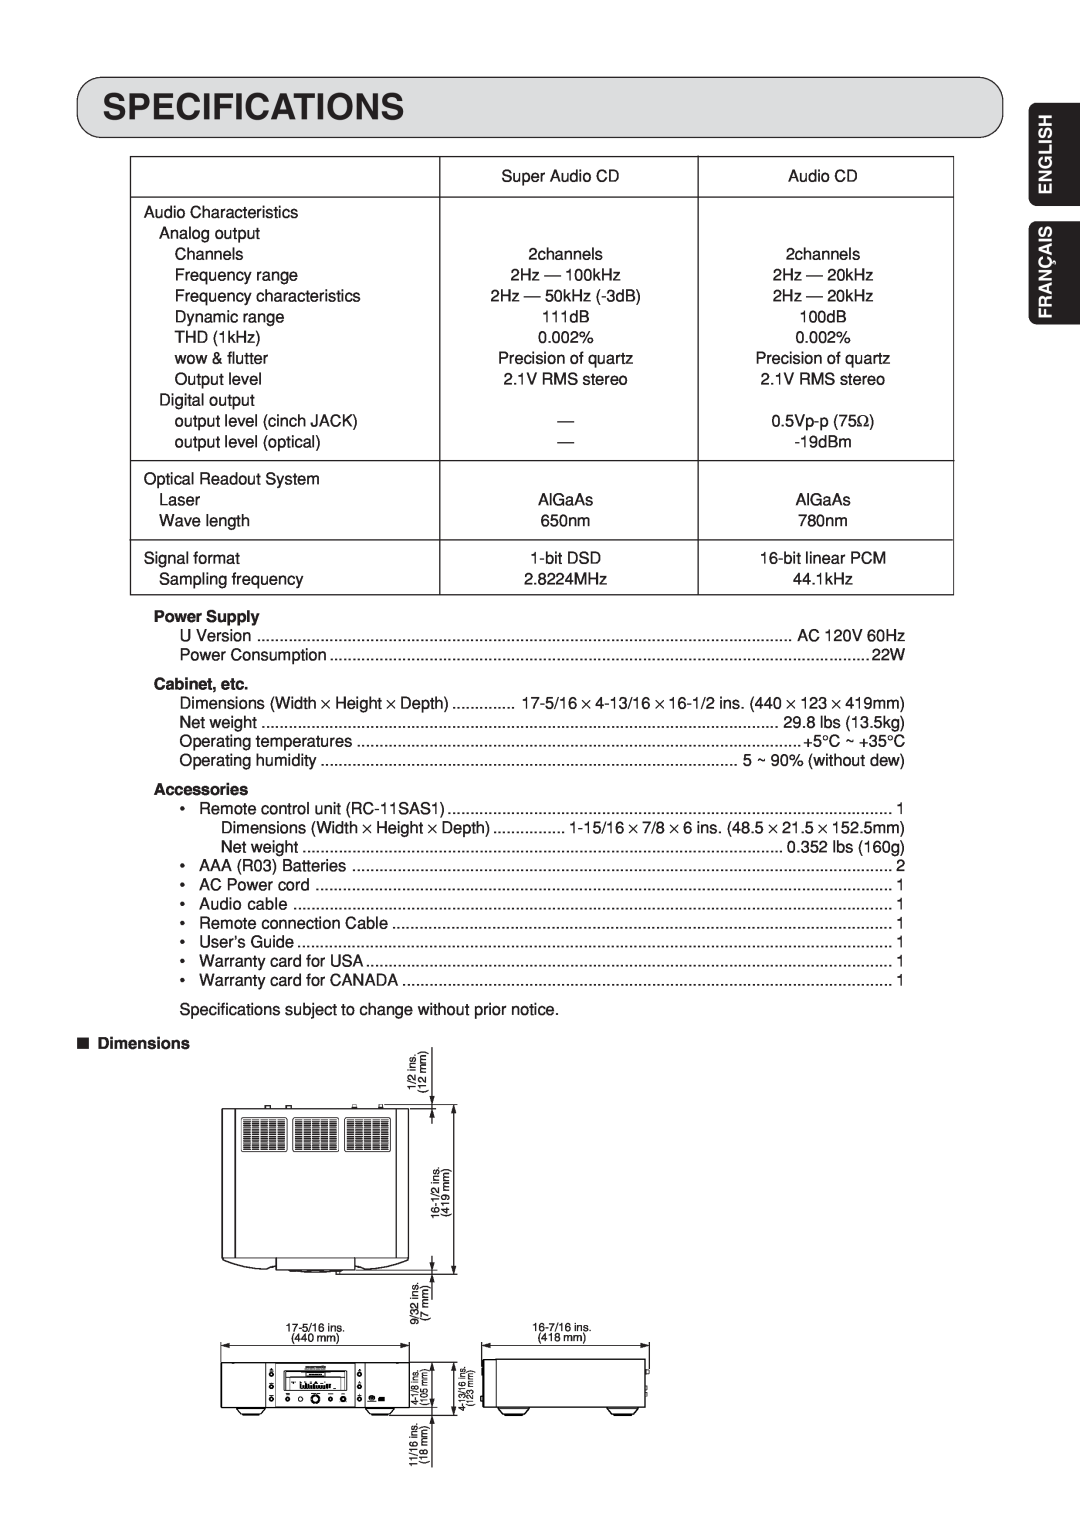 Marantz SA-15S1 manual Specifications, Français English, Power Supply, Cabinet, etc, Accessories, Dimensions 